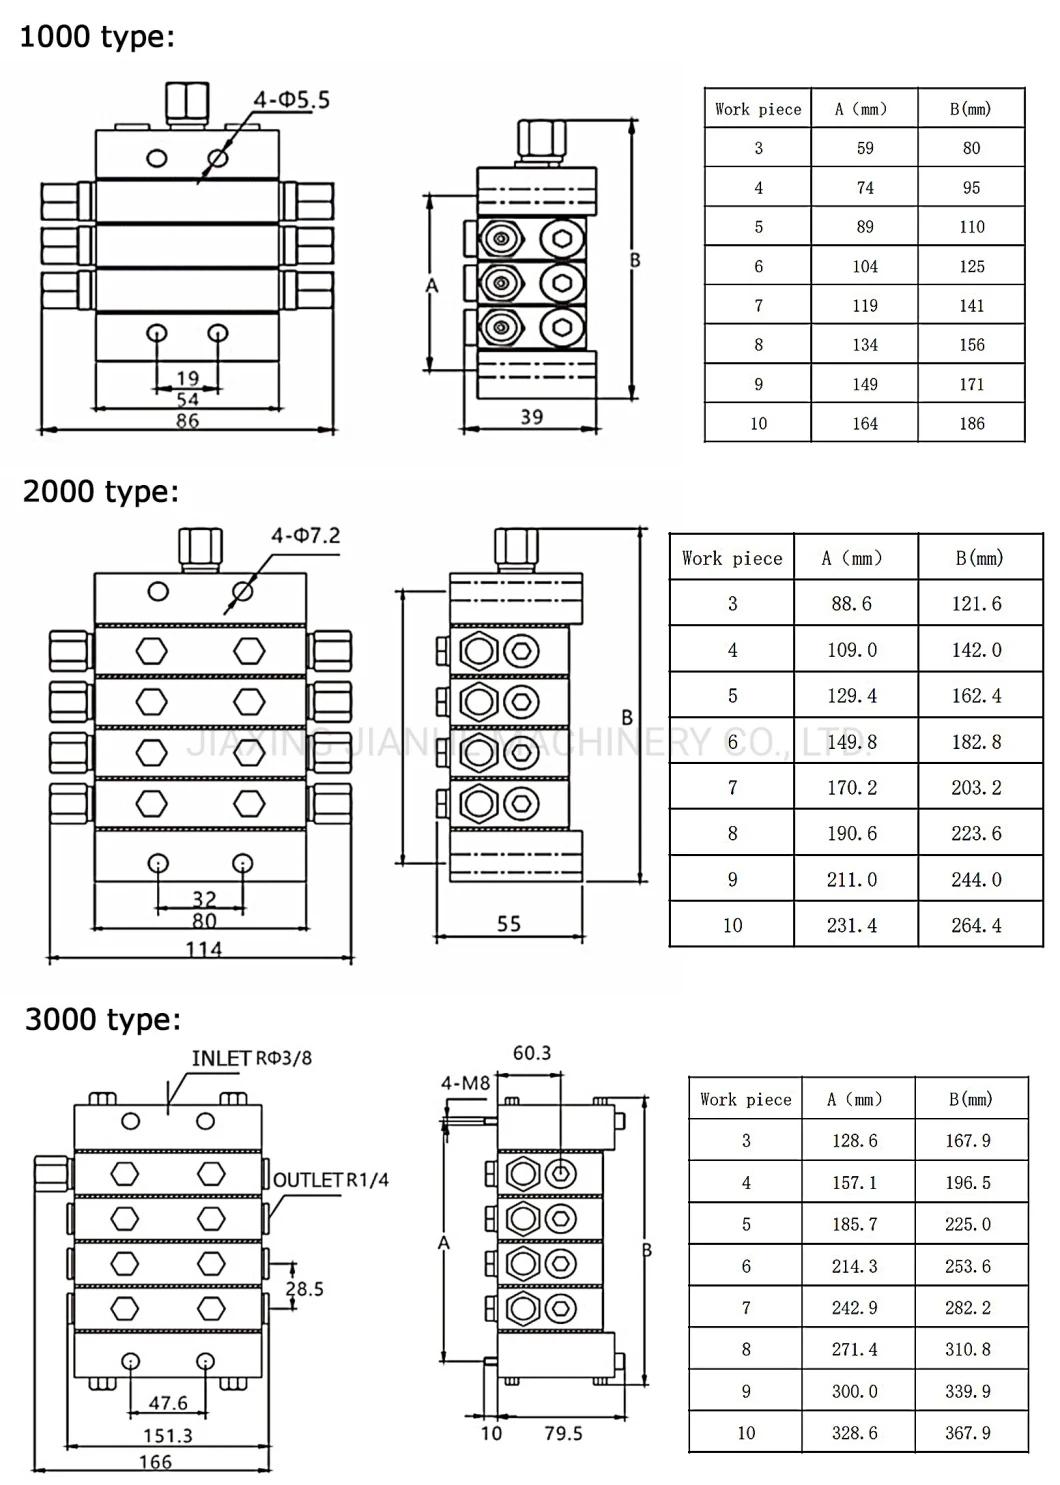 Type 2000 Progressive Distributor Grease Distributor Valve Centralized Lubrication Distributor